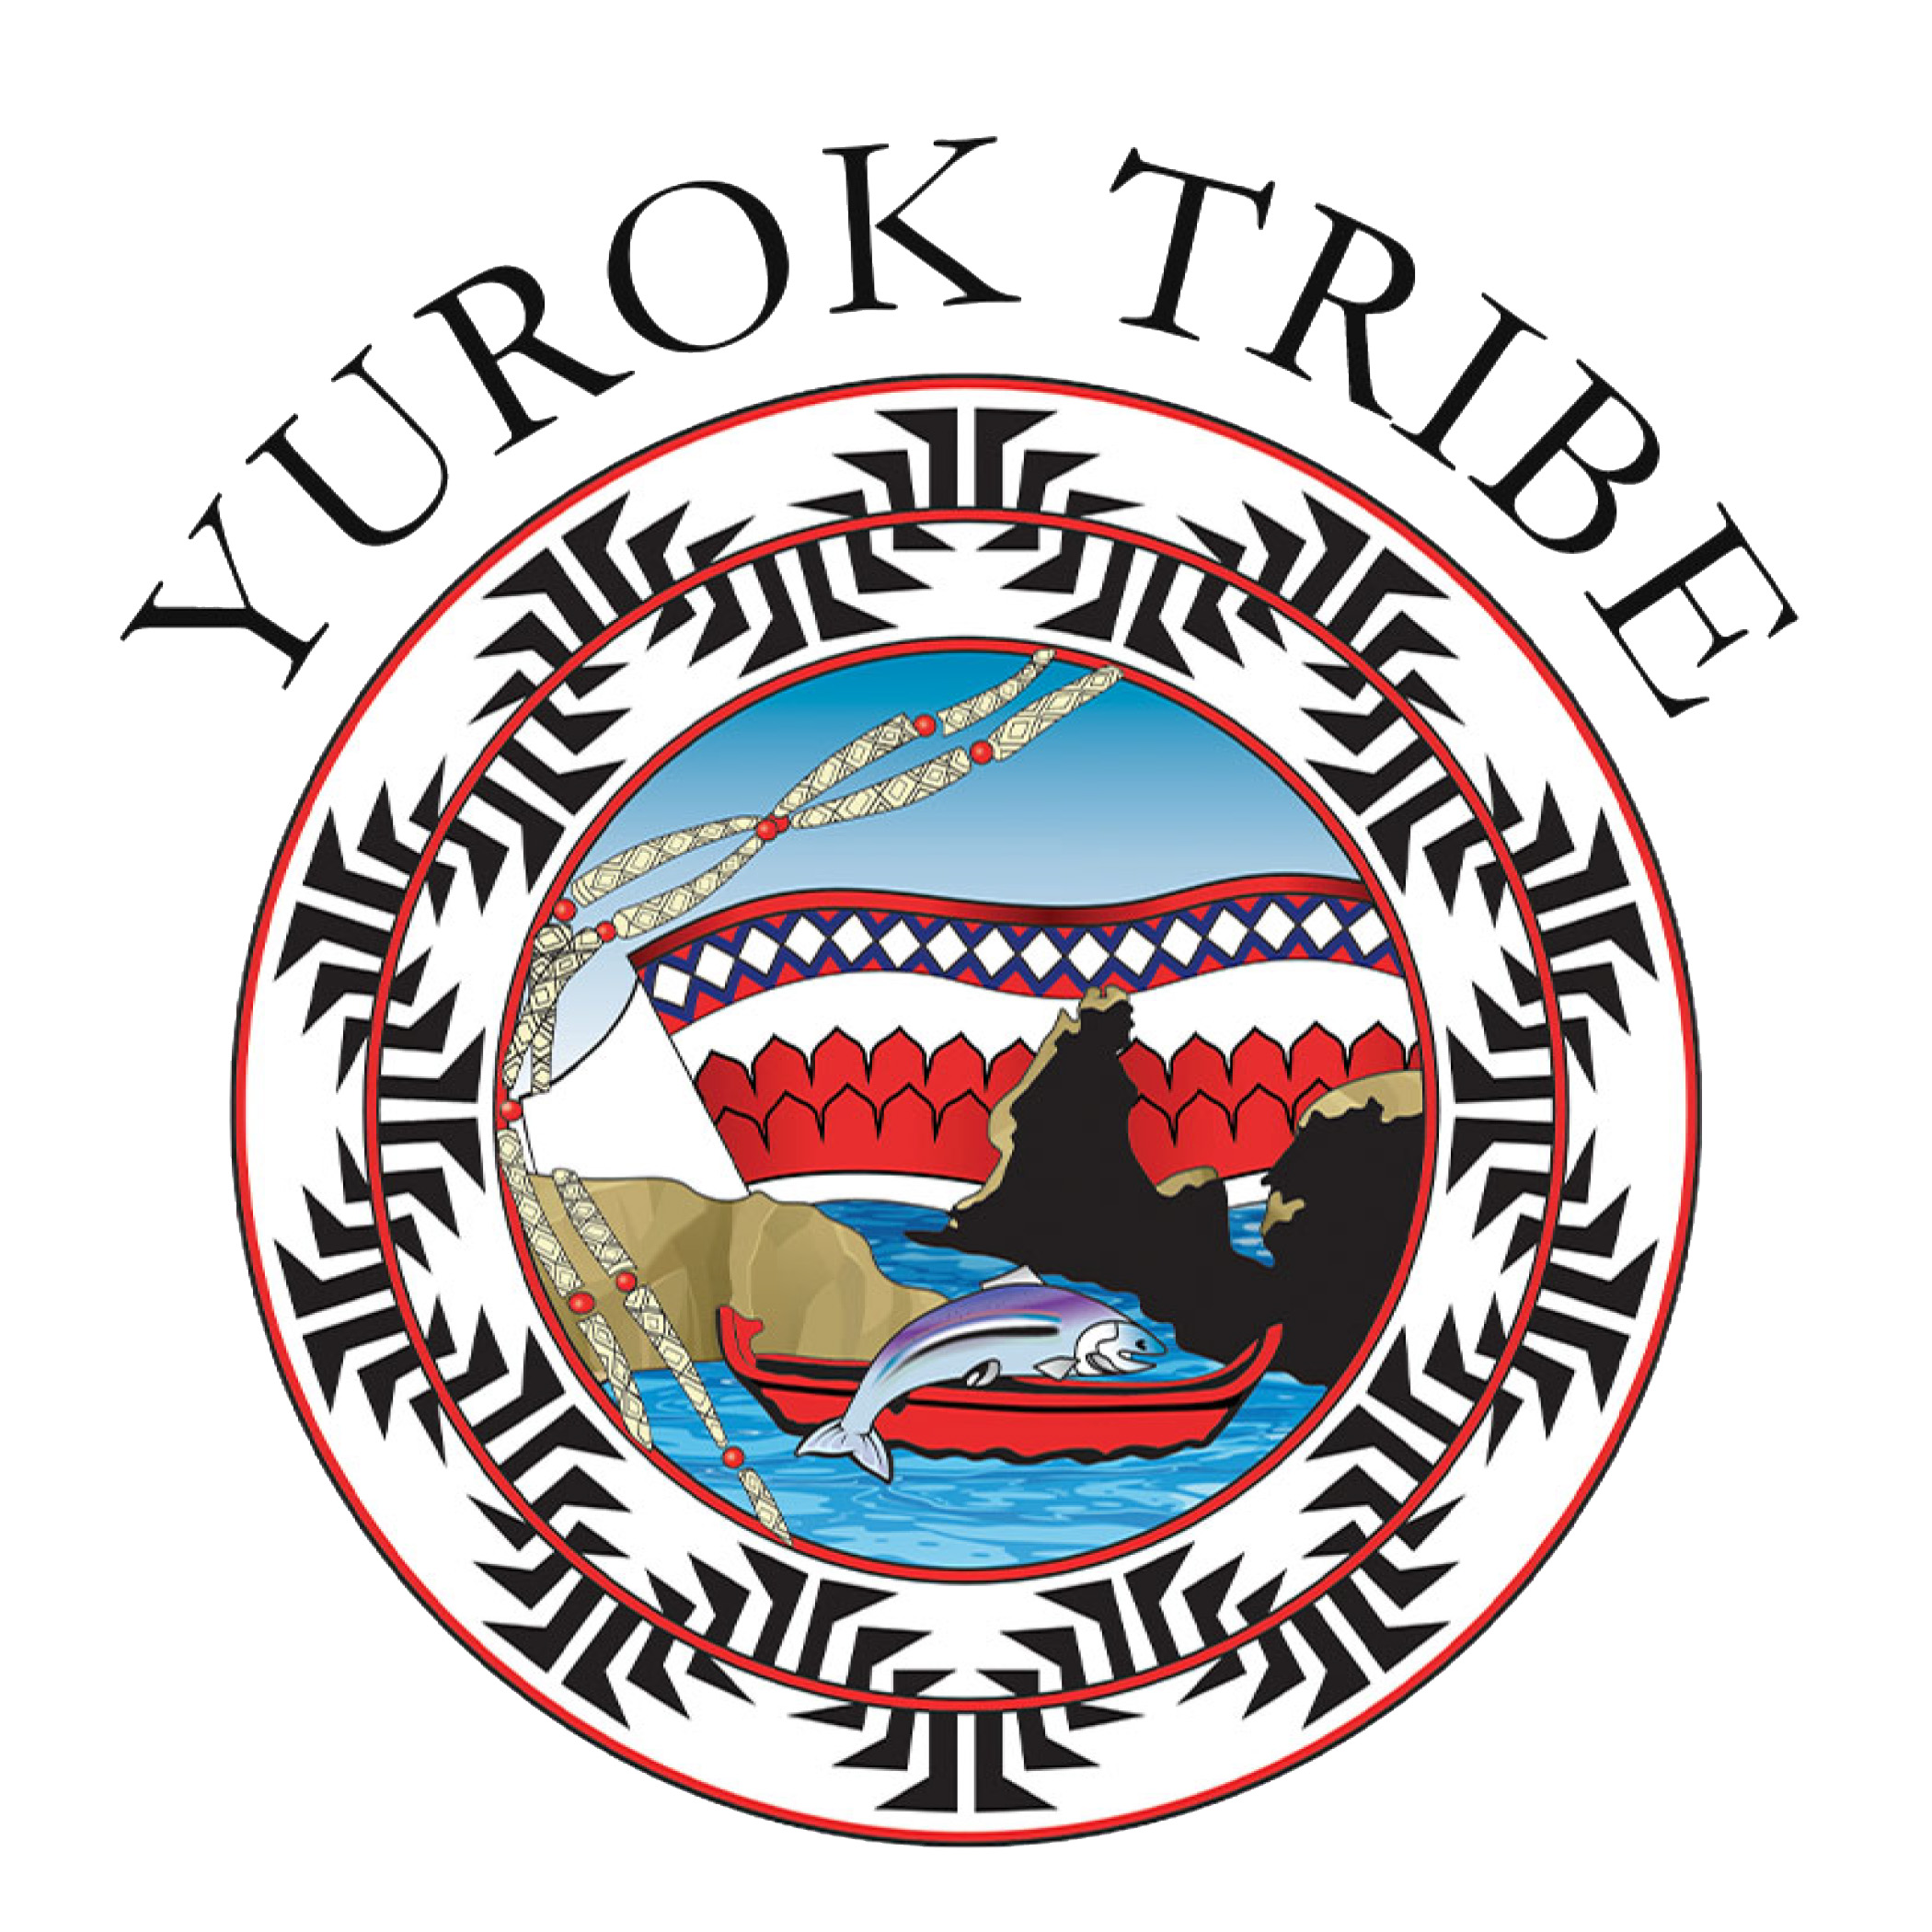 The Yurok Tribe